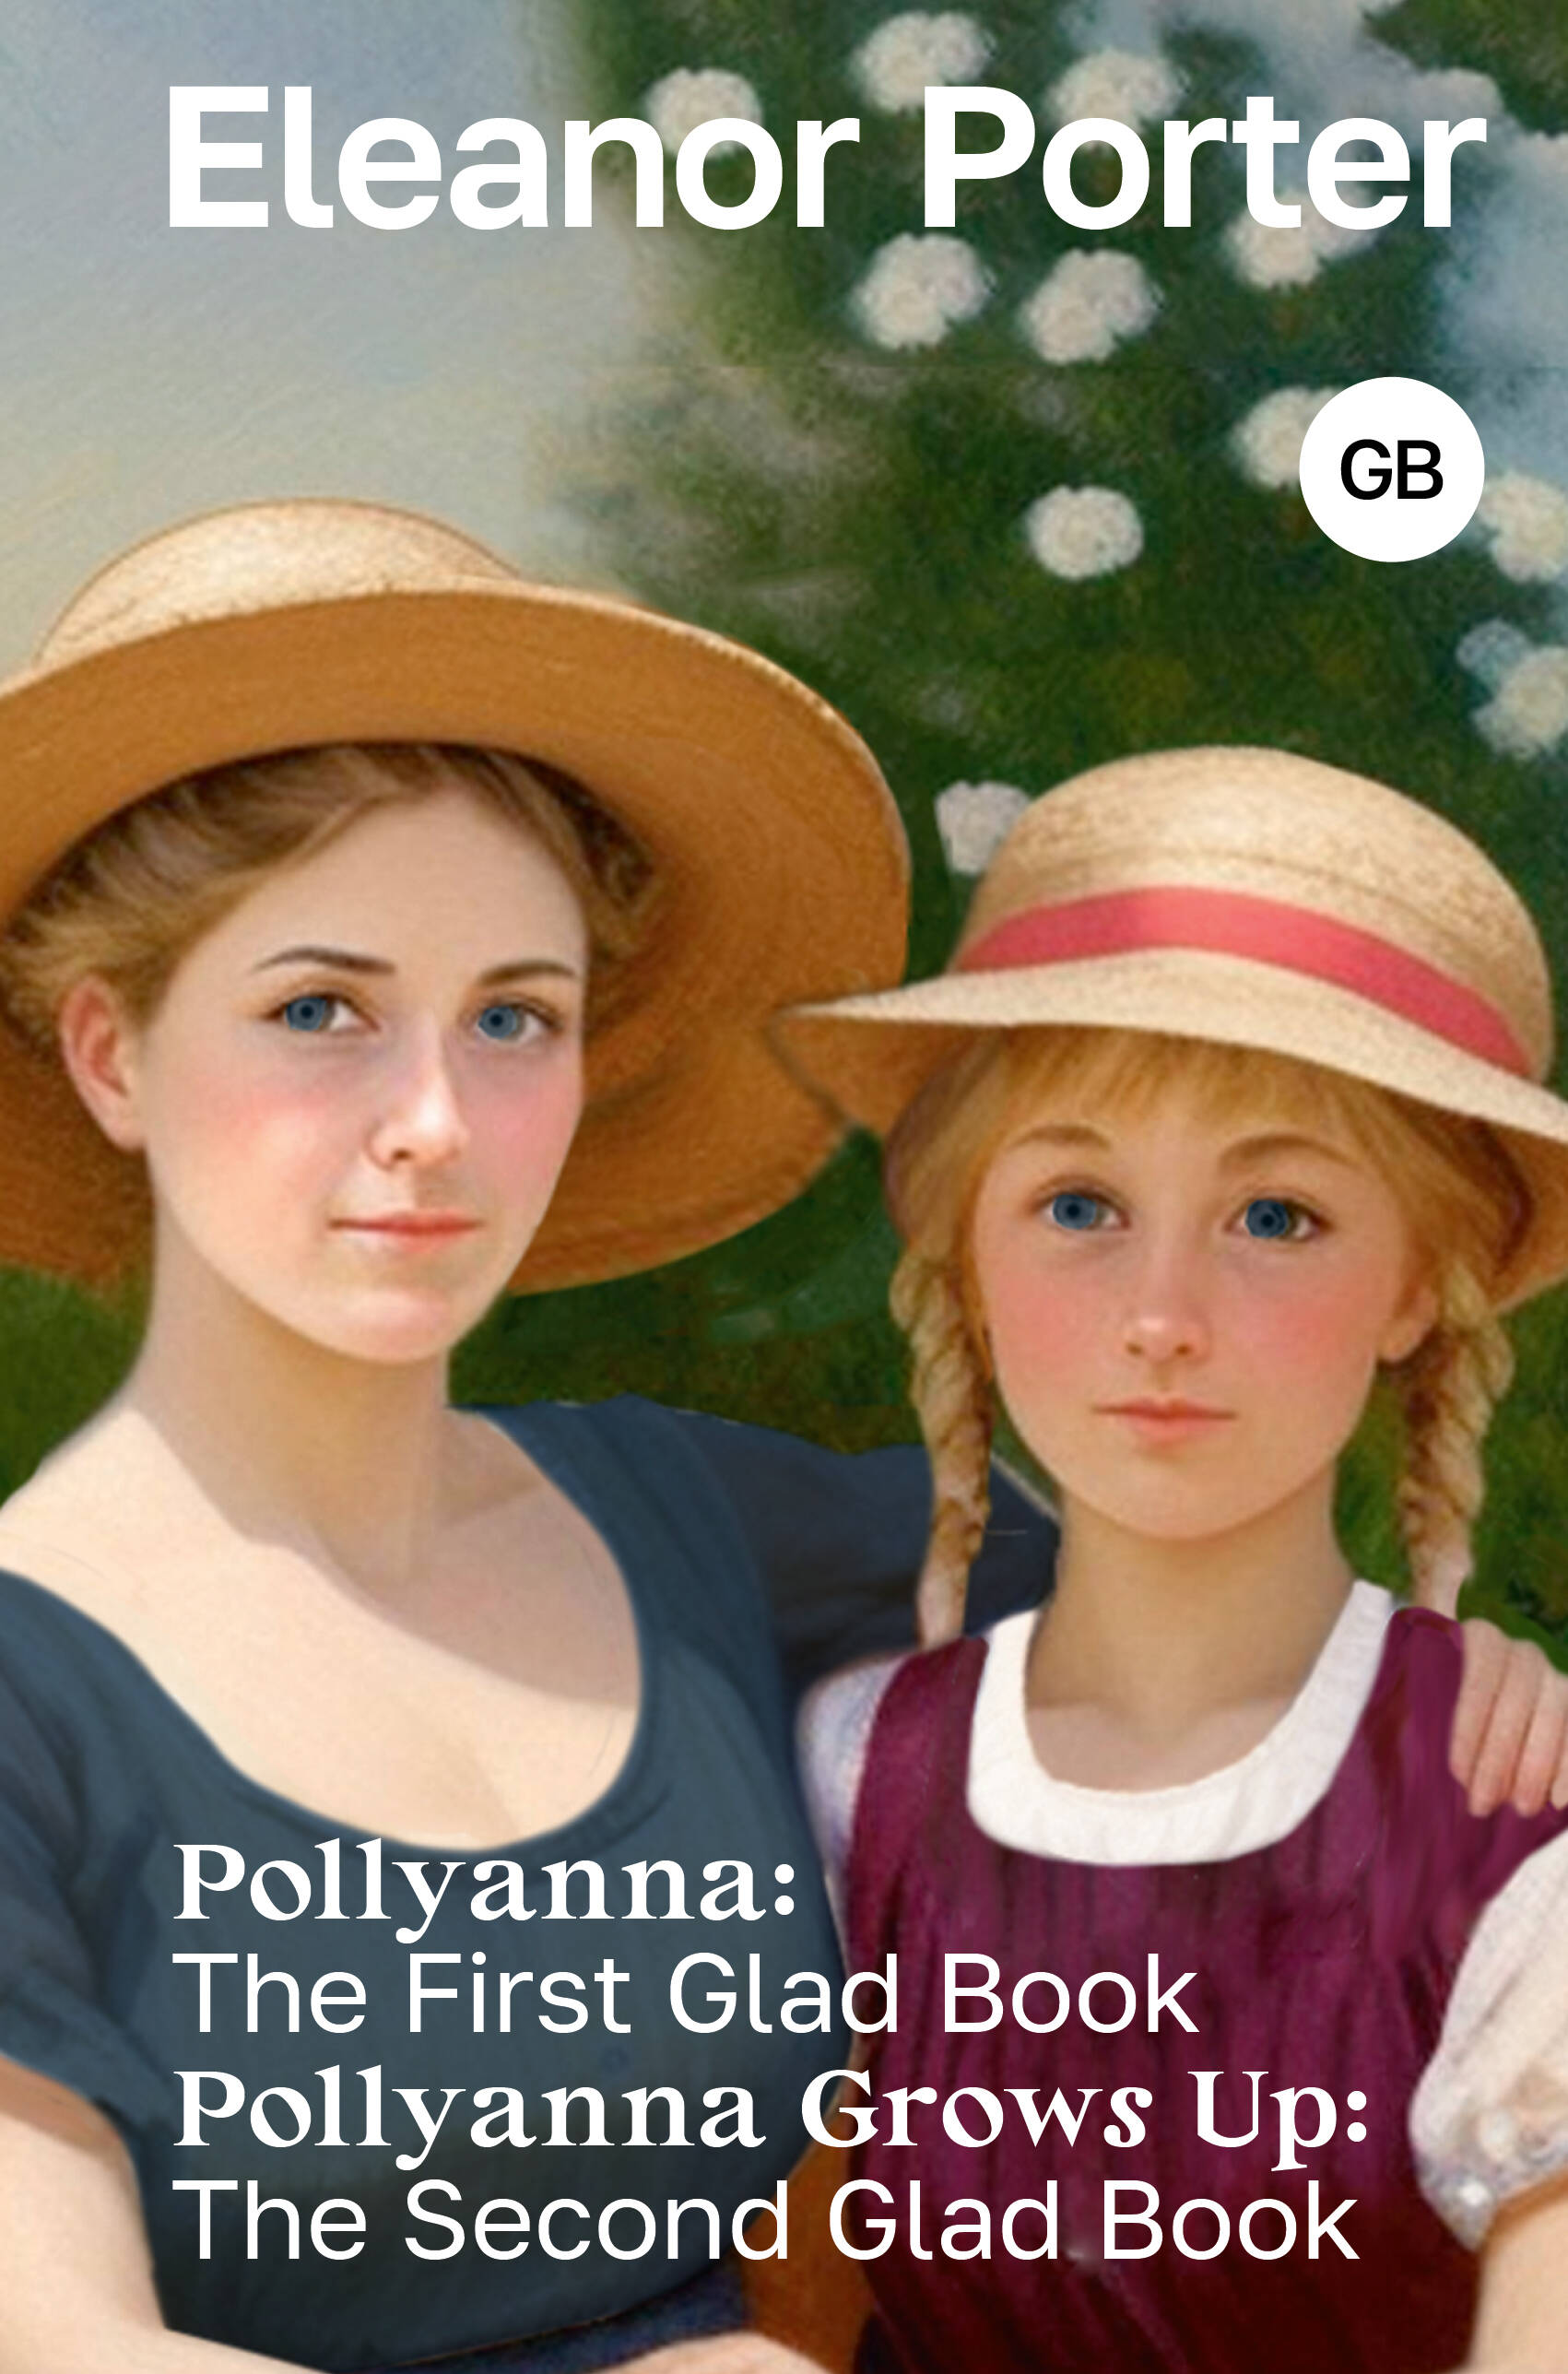 Pollyanna: The First Glad Book. Pollyanna Grows Up: The Second Glad Book портер элинор поллианна юность поллианны